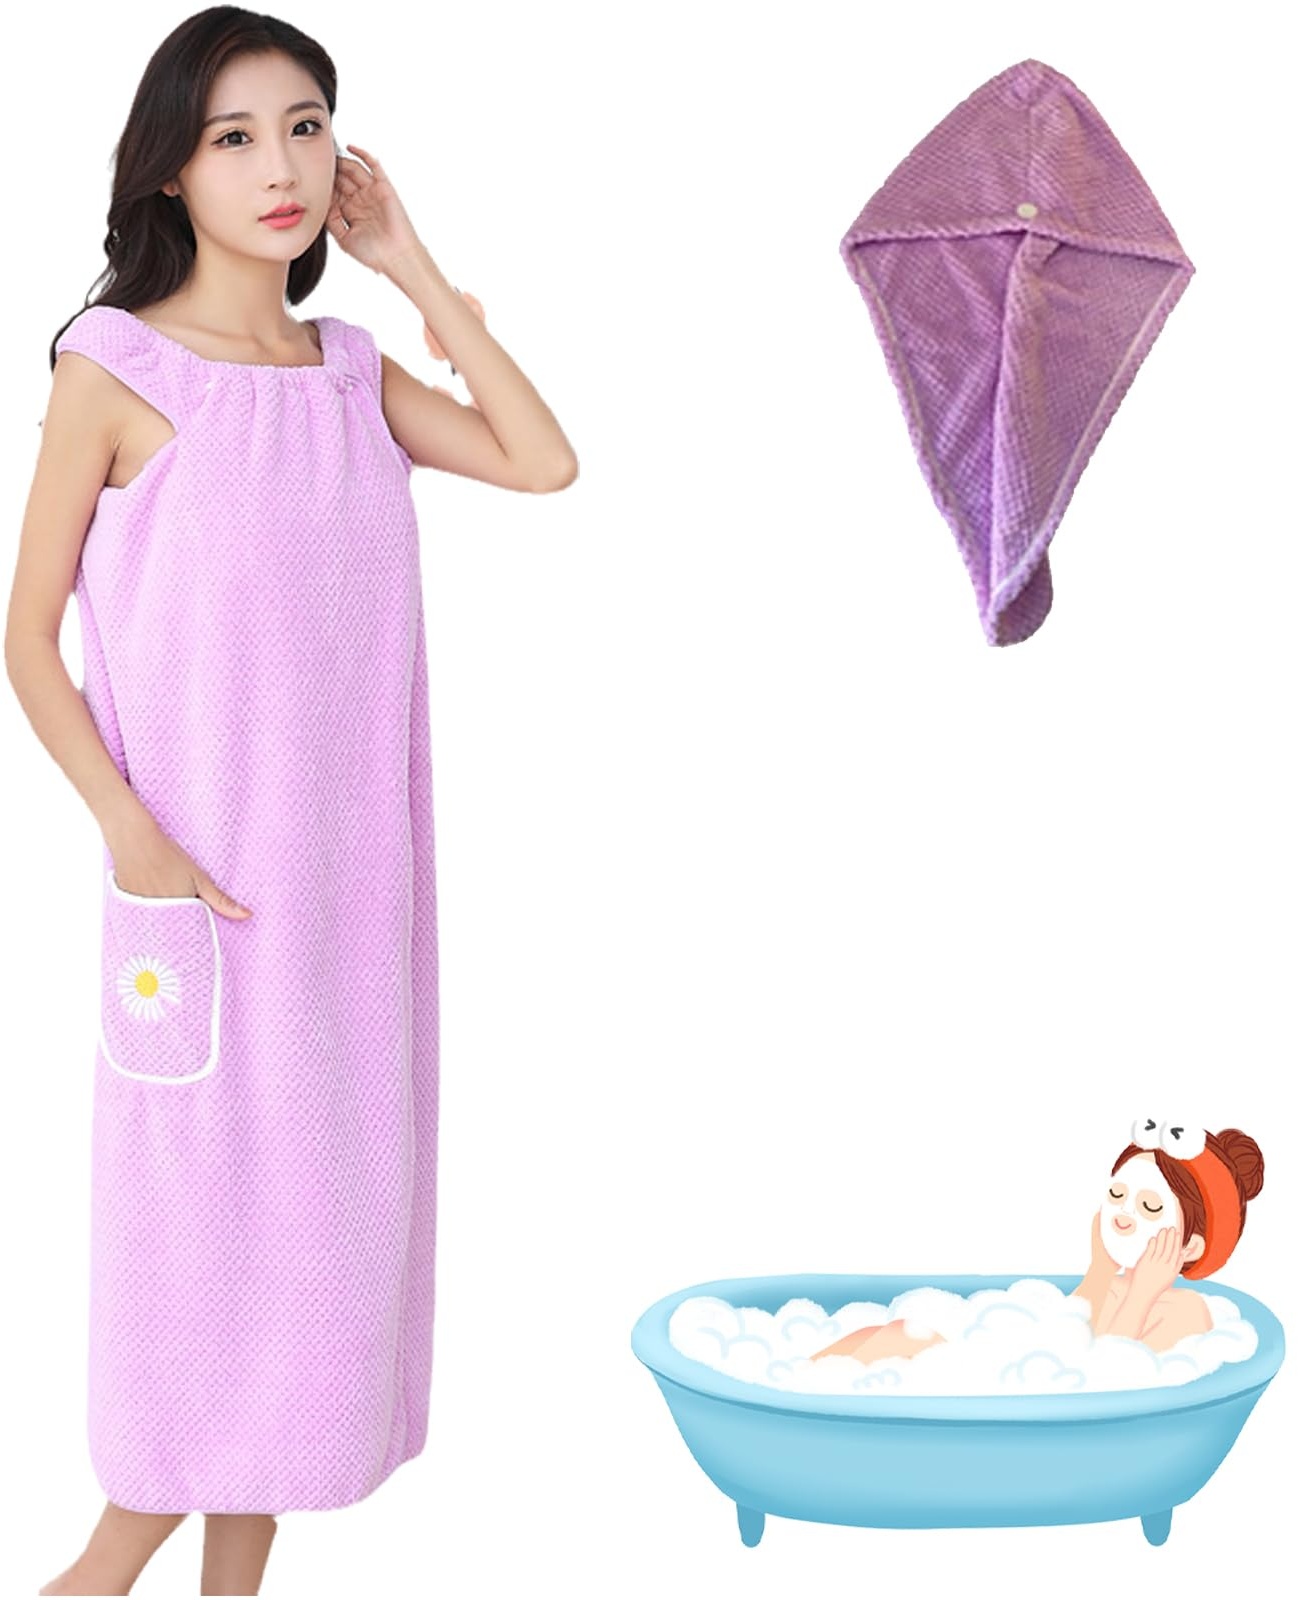 2023 Quick Dry Absorb Water Wearable Bath Towel,Wearable Bathrobes Shower Wrap Towel for Women (Purple,M (143~198 lbs))